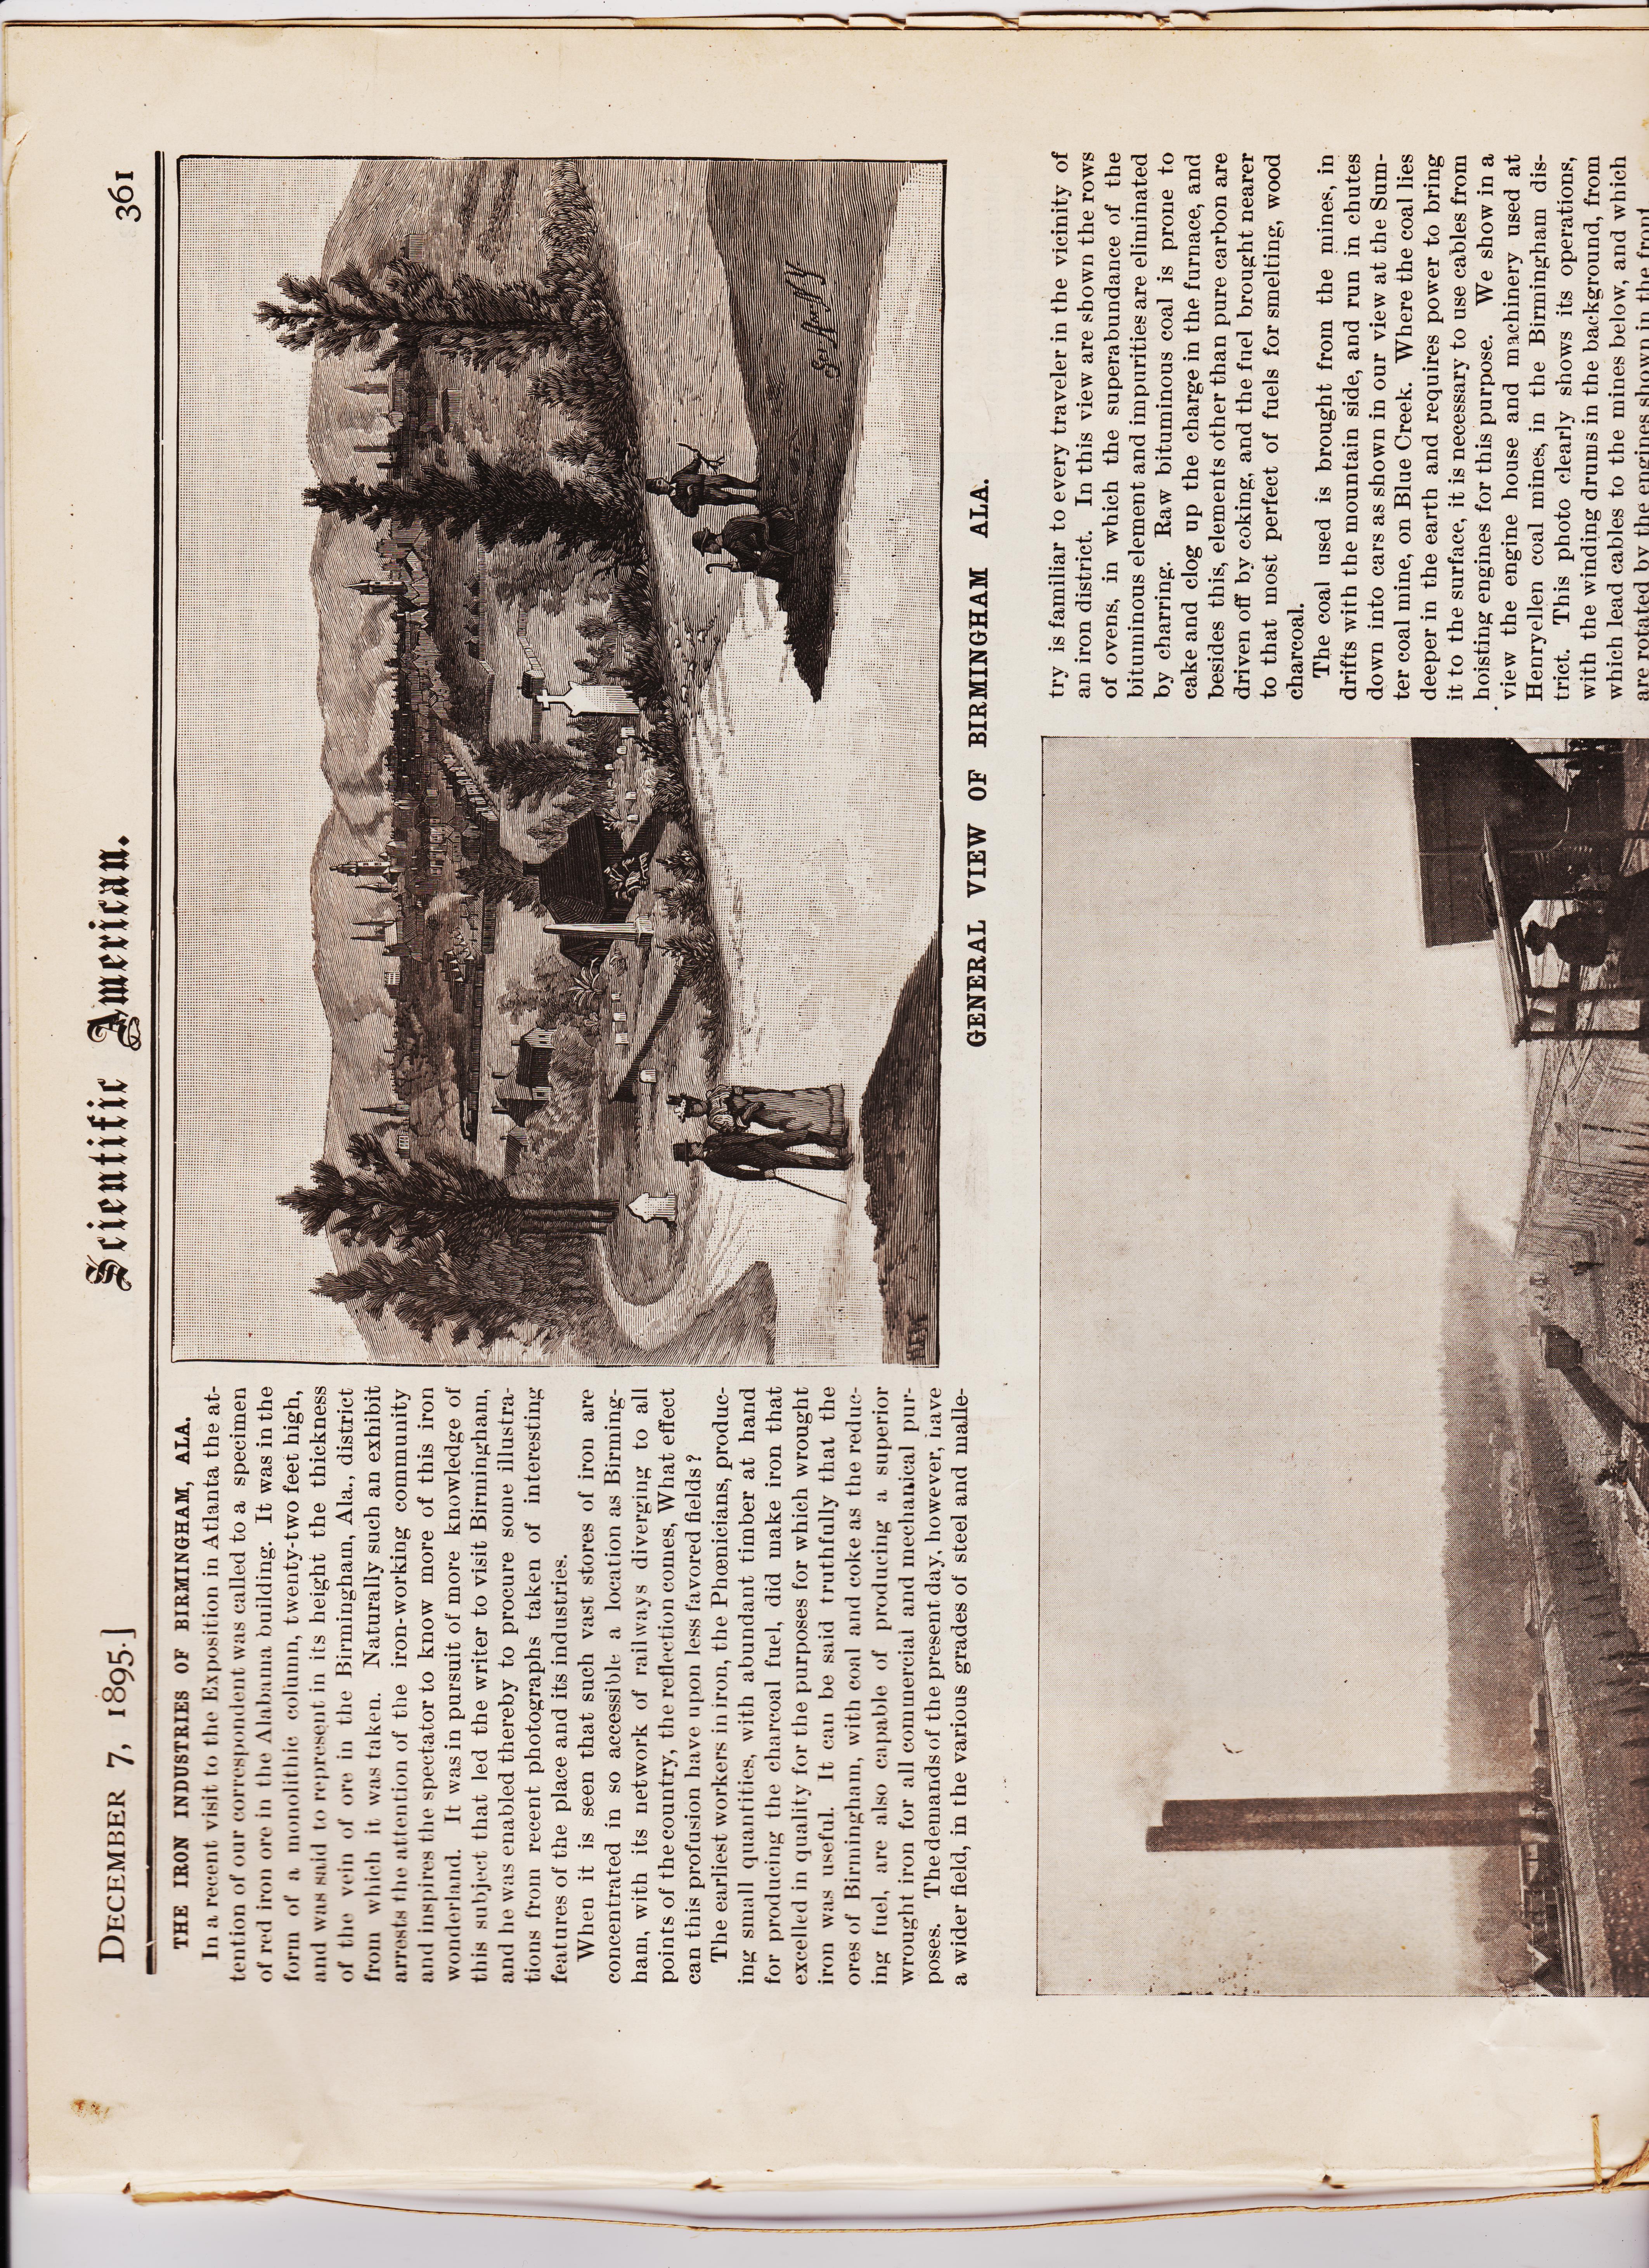 https://antiquemachinery.com/images-scientific-american/Scientific-American-1895-Dec-7-1895-pg-361-top-Platt-Mine-Coke-Oven-Sumter-Coal-Mine-Blue-Creek-Birmingham-AL.jpeg